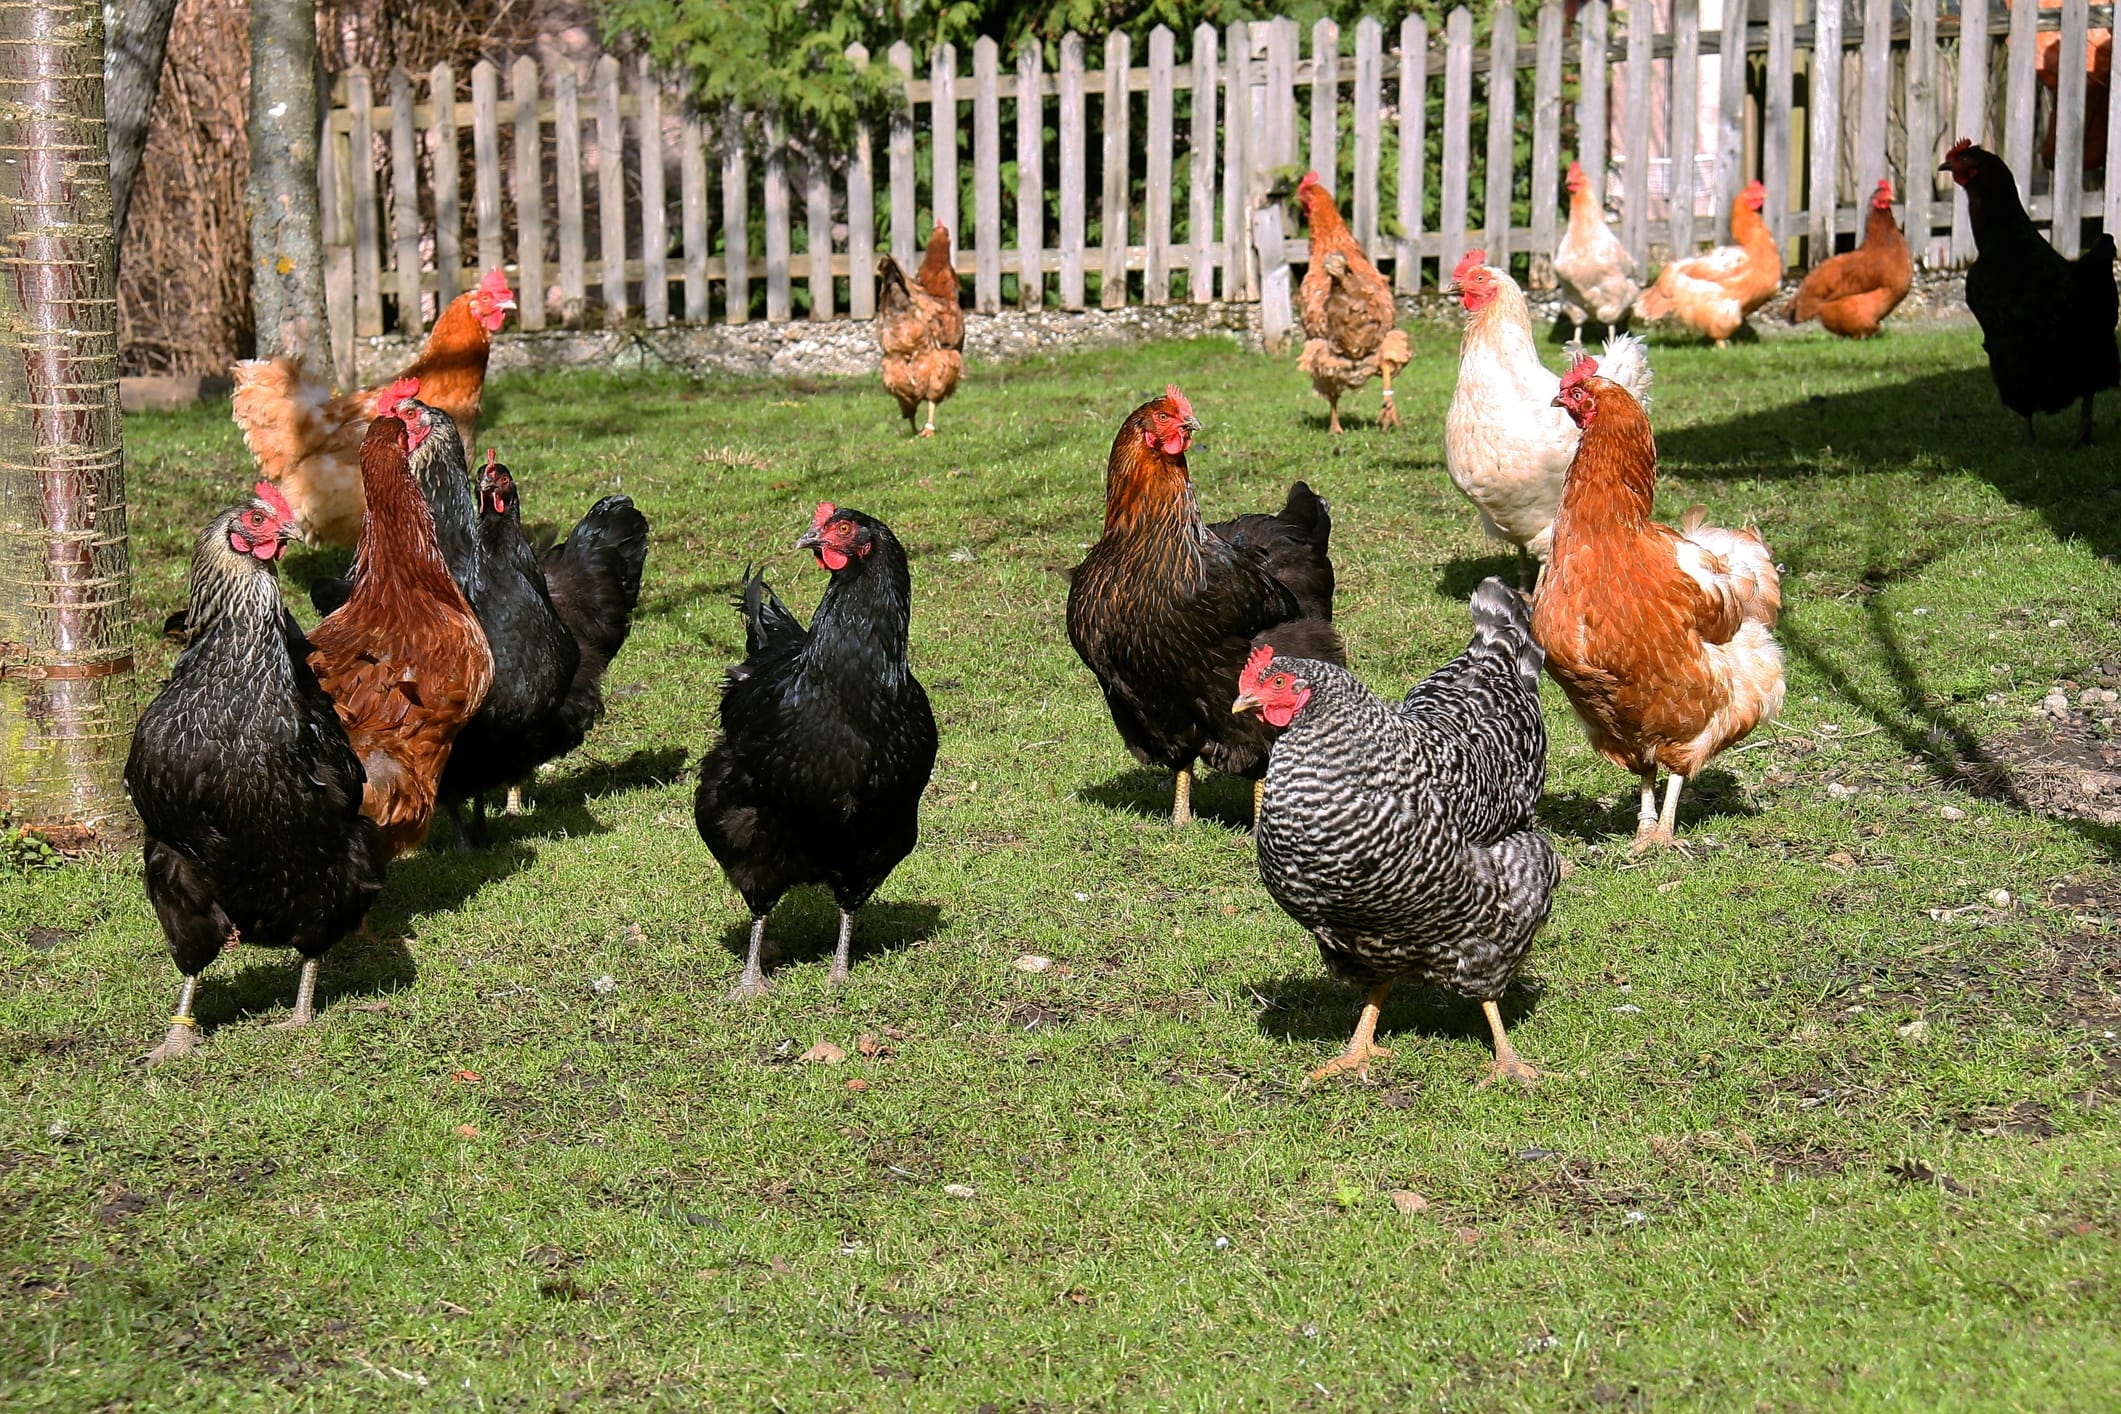 Flock of chicken running on grass